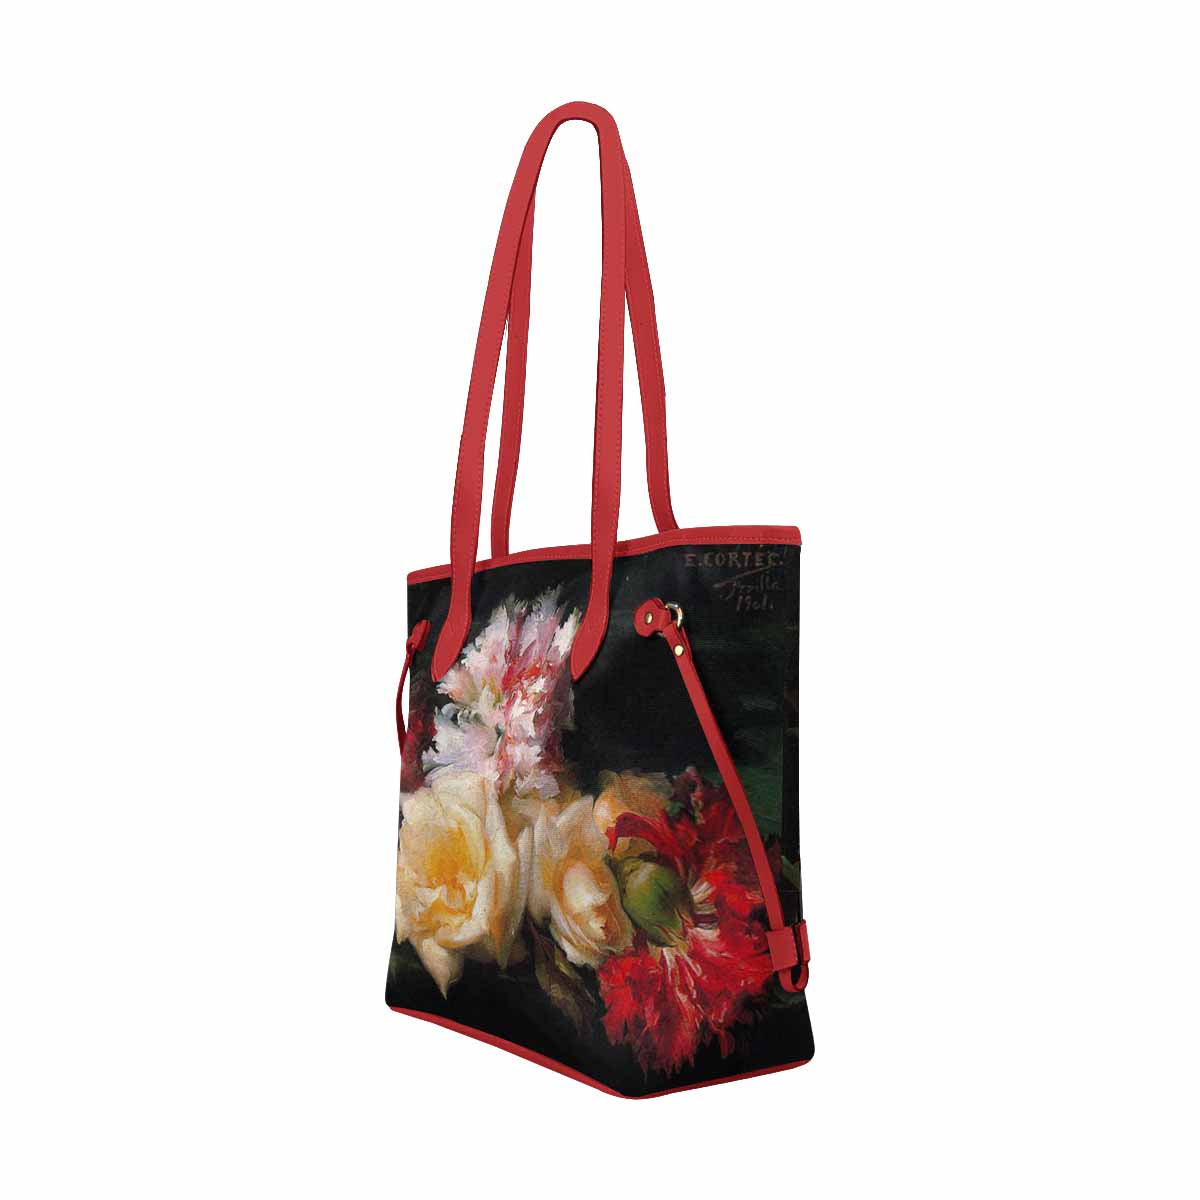 Vintage Floral Handbag, Classic Handbag, Mod 1695361 Design 30 RED TRIM